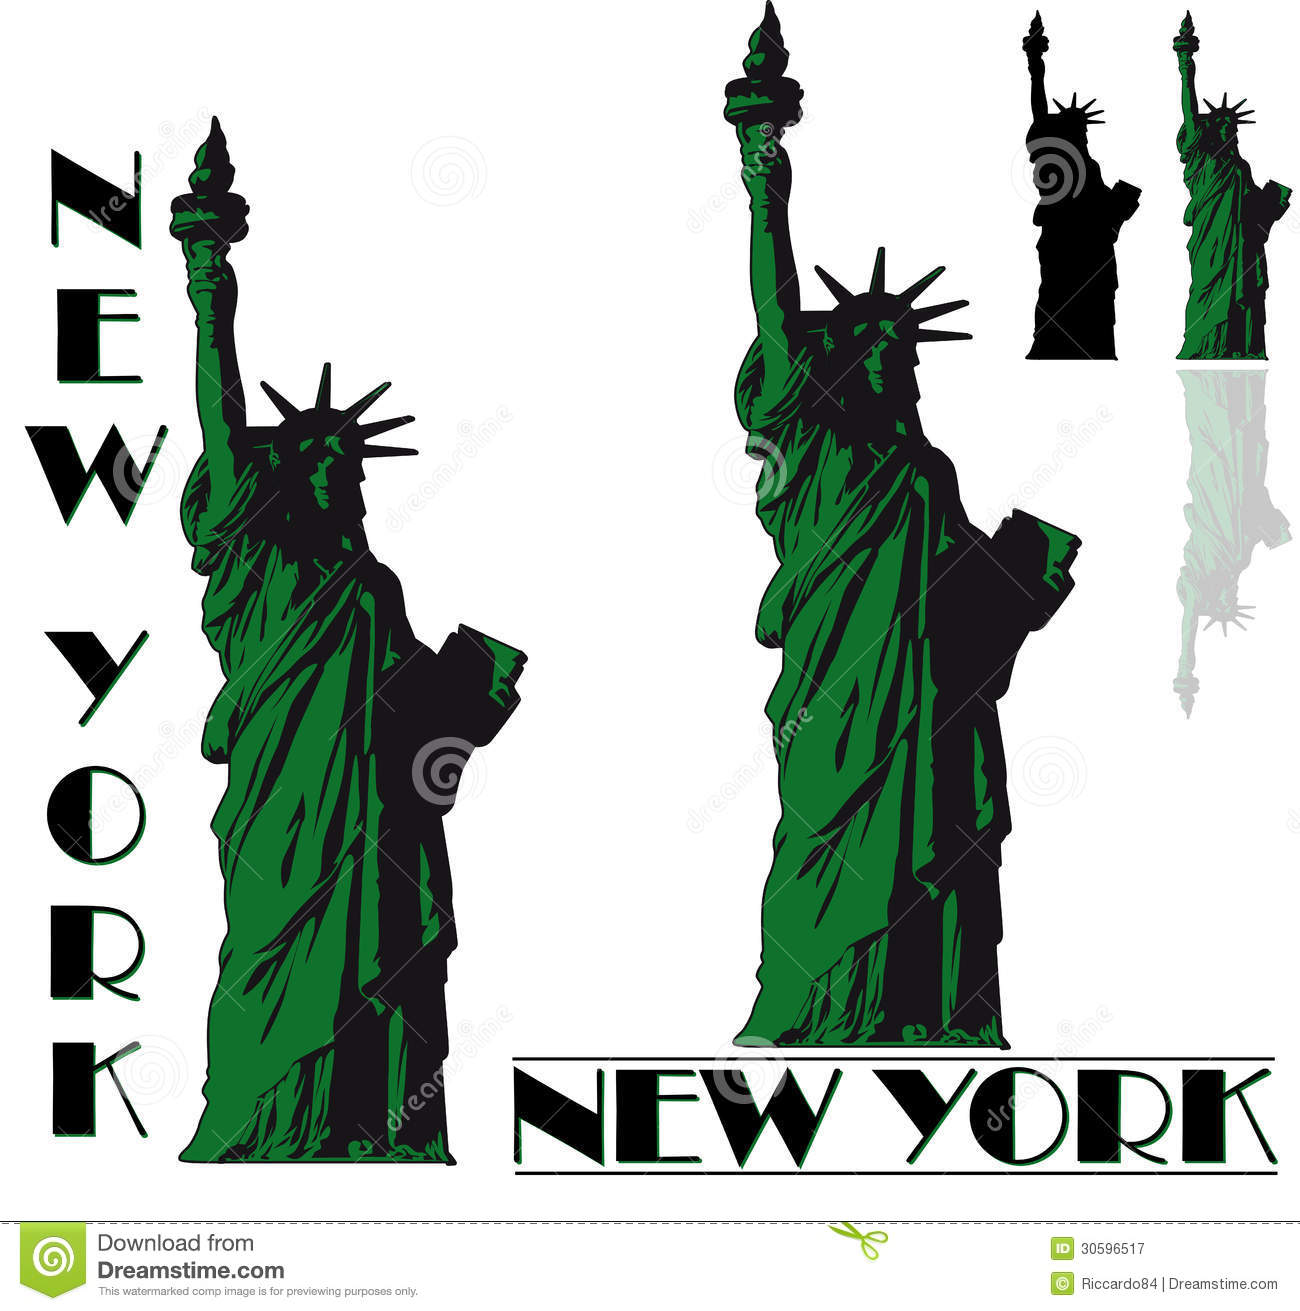 New York Statue of Liberty Icon